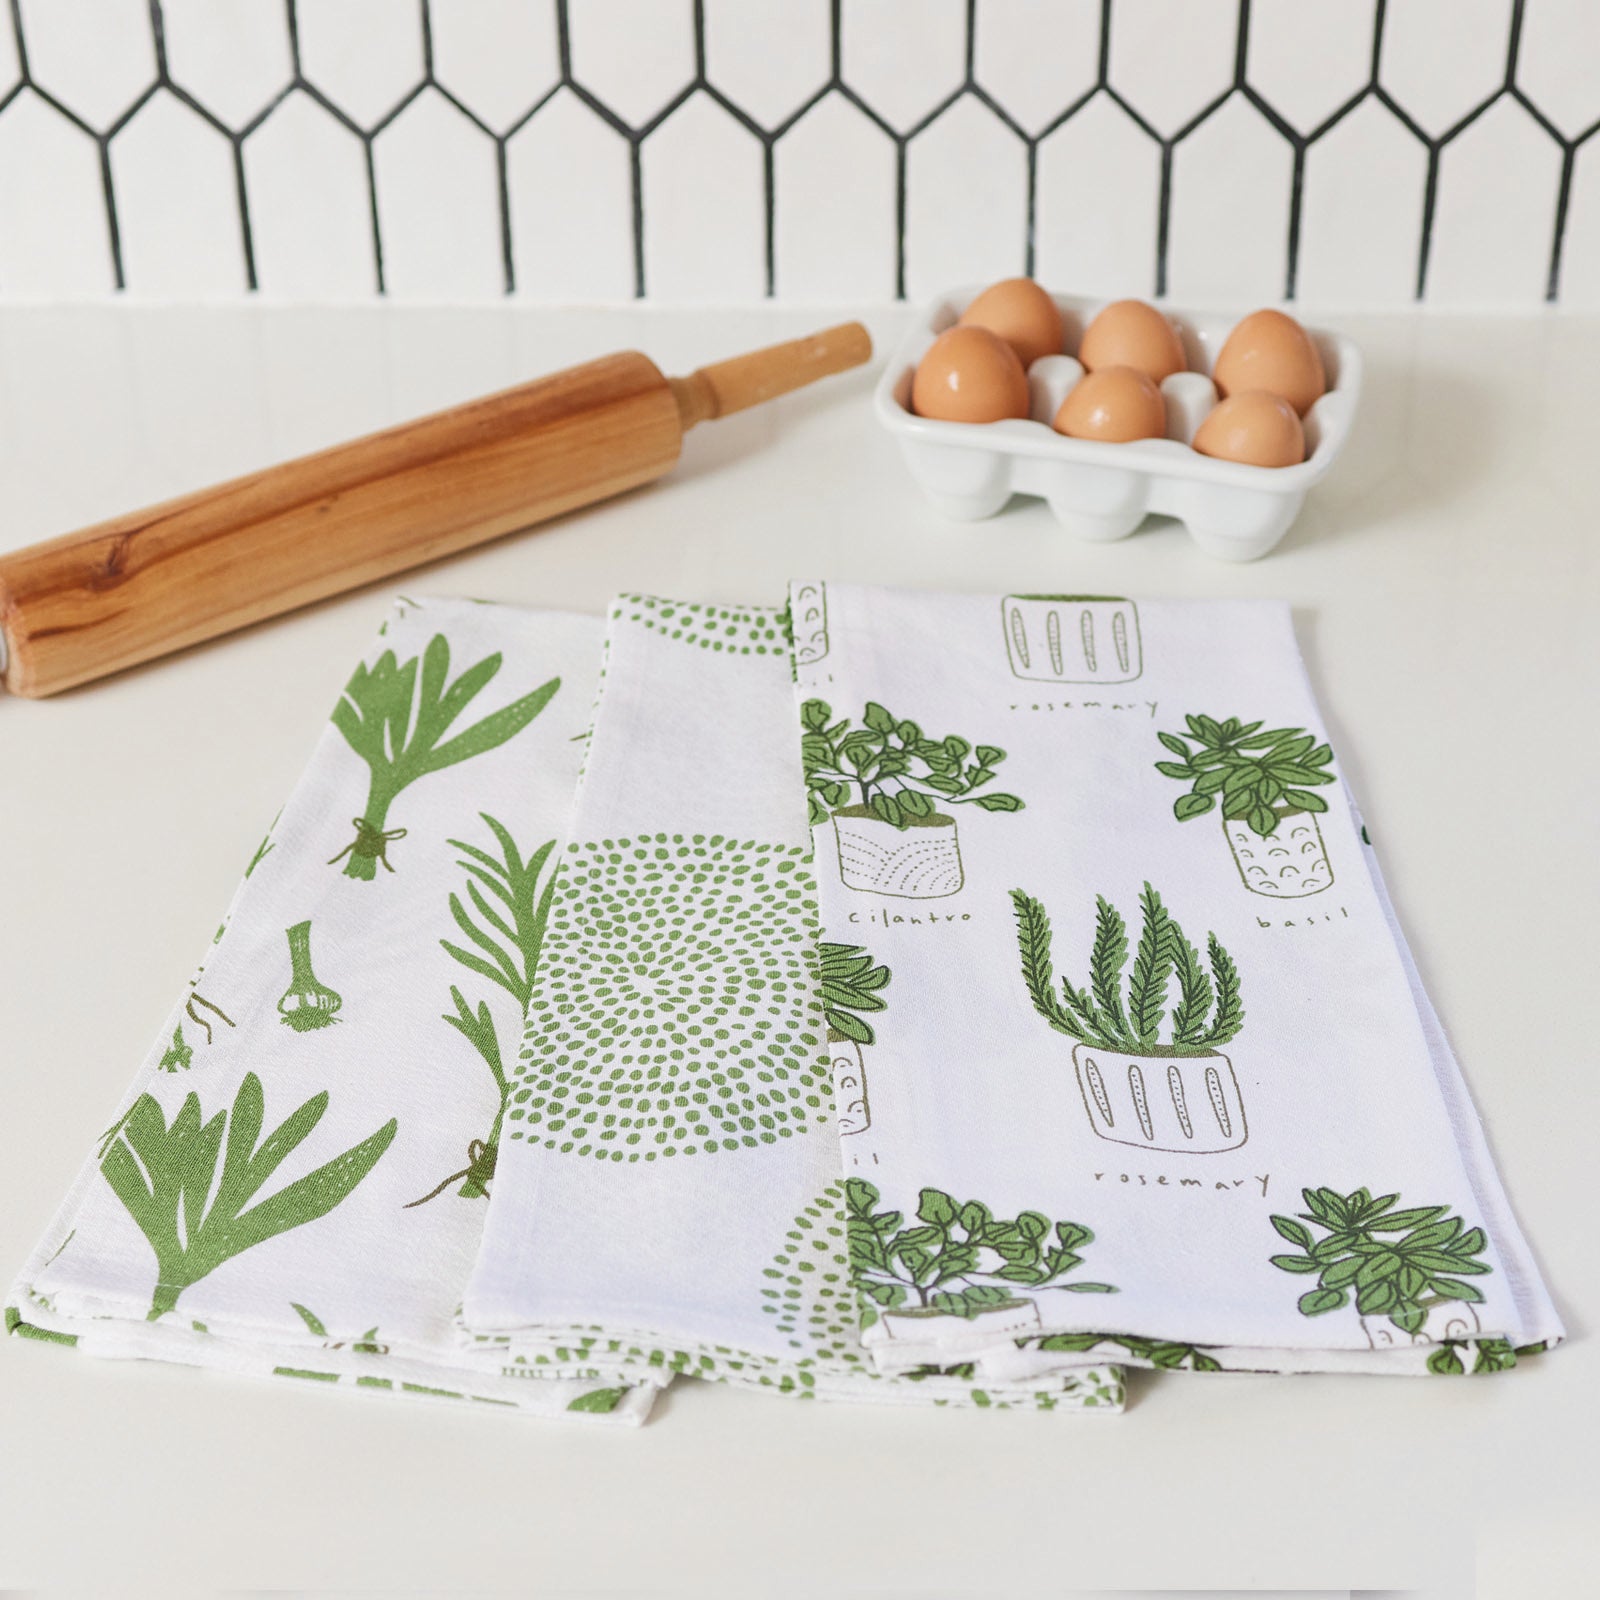 Eco Friendly Kitchen Dish Cloths in Green Herbs Pattern – rockflowerpaper  LLC